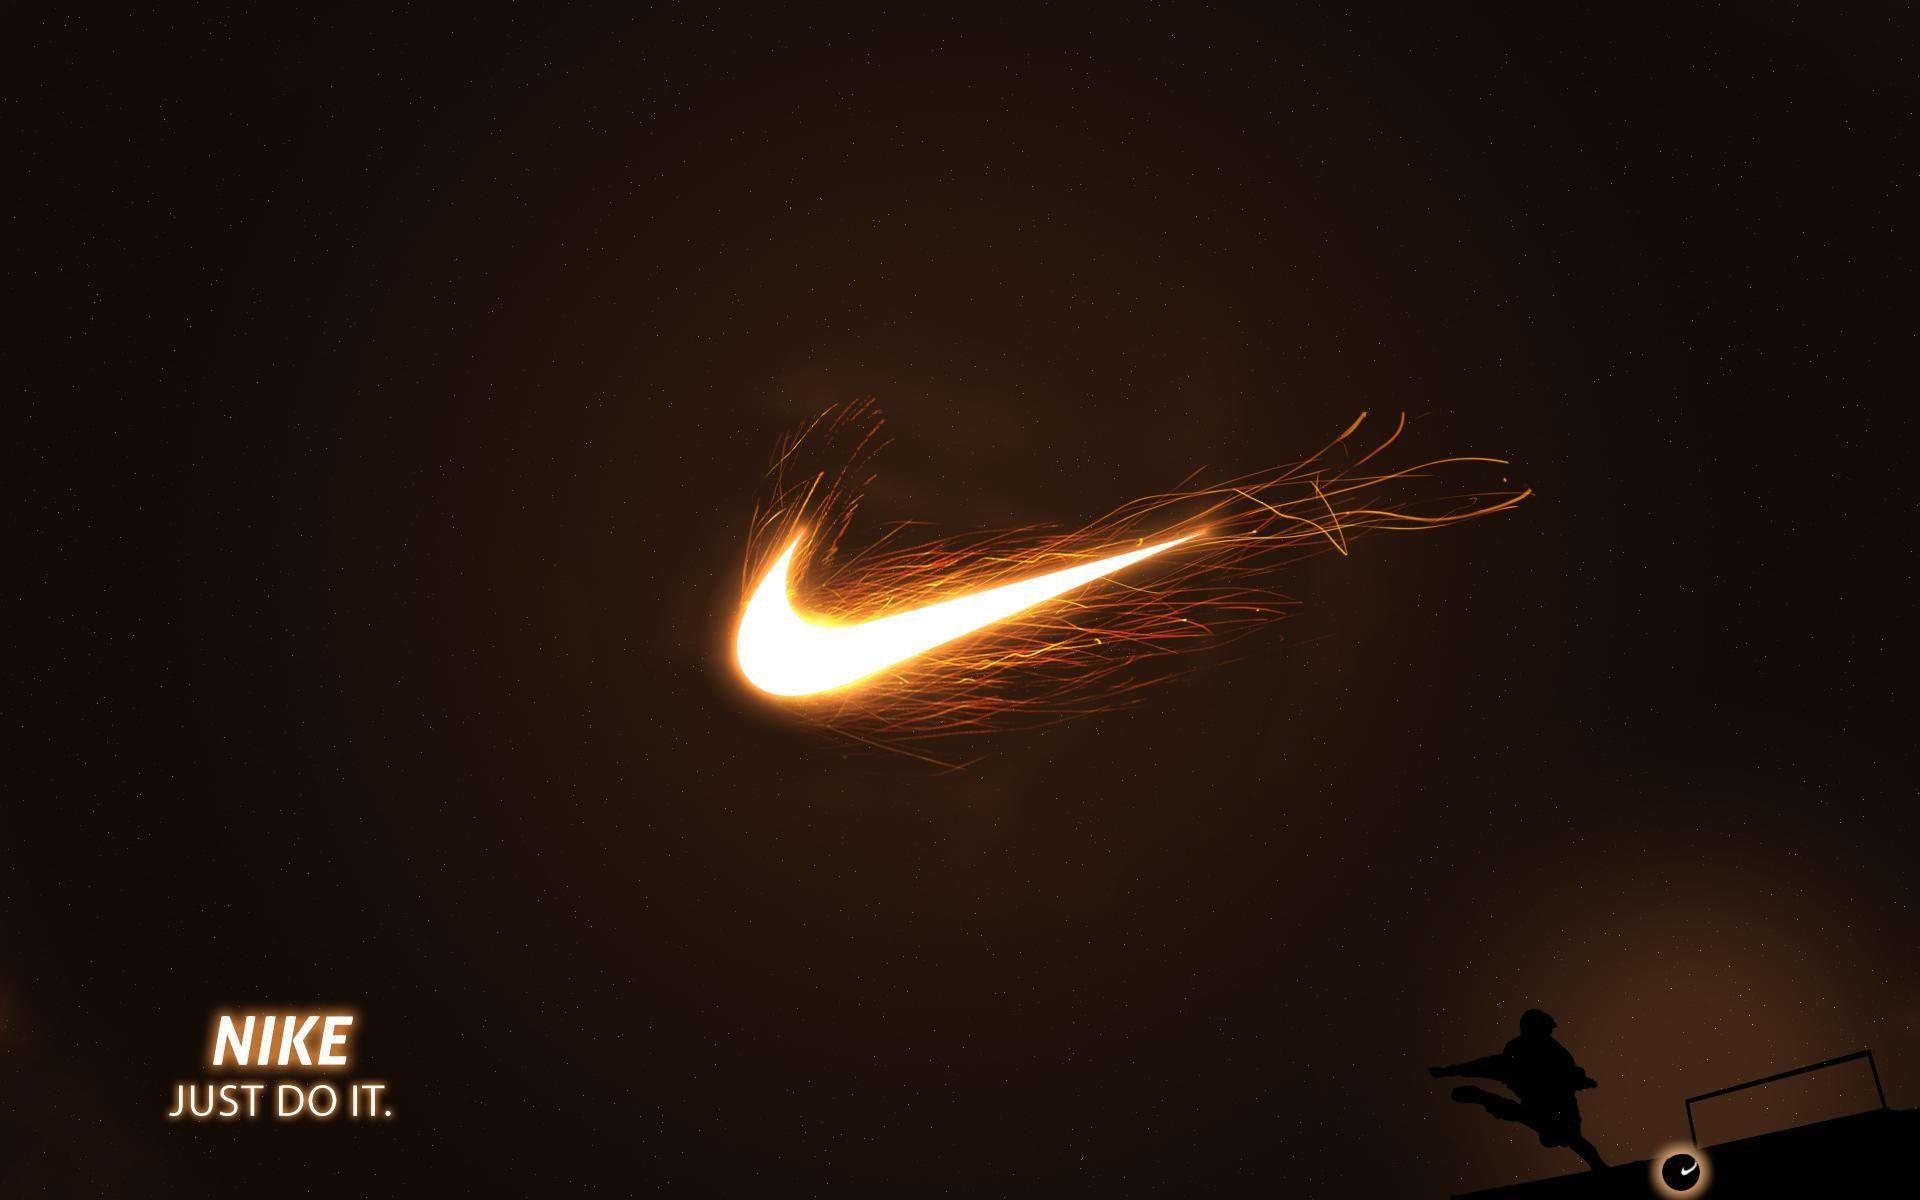 Nike Baseball Wallpaper Image